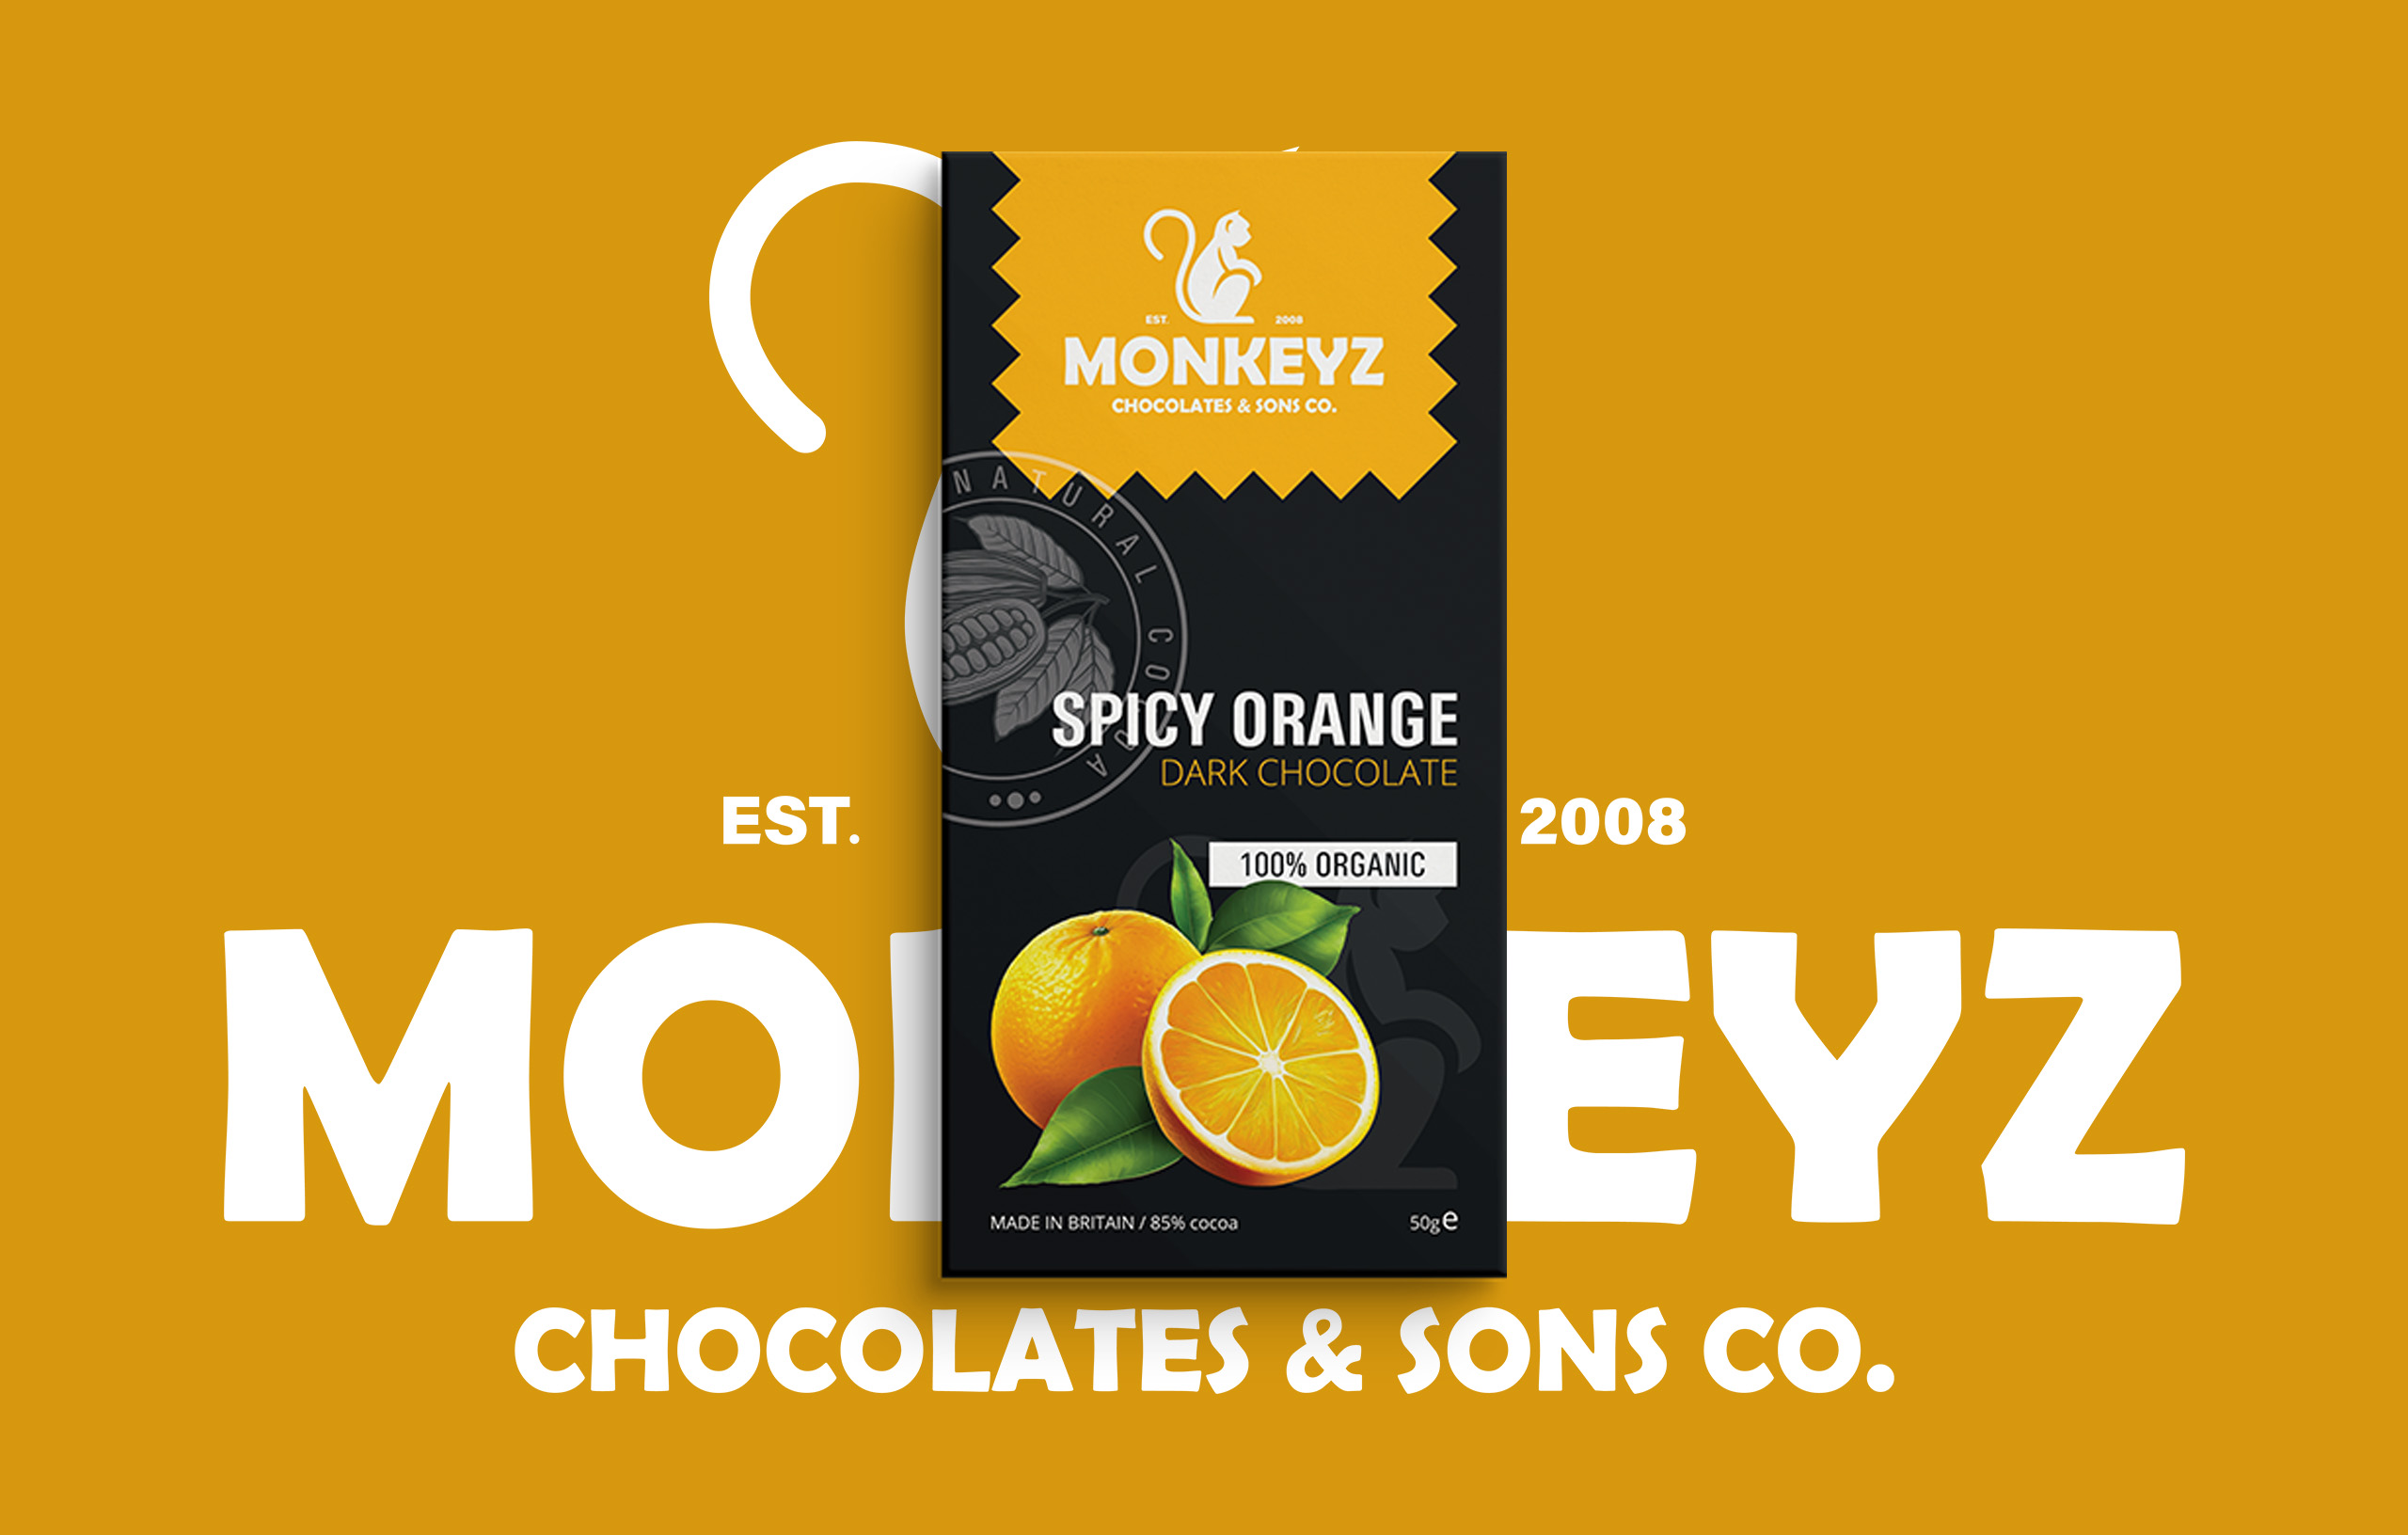 Monkeyz Co. London Branding and Packaging Design